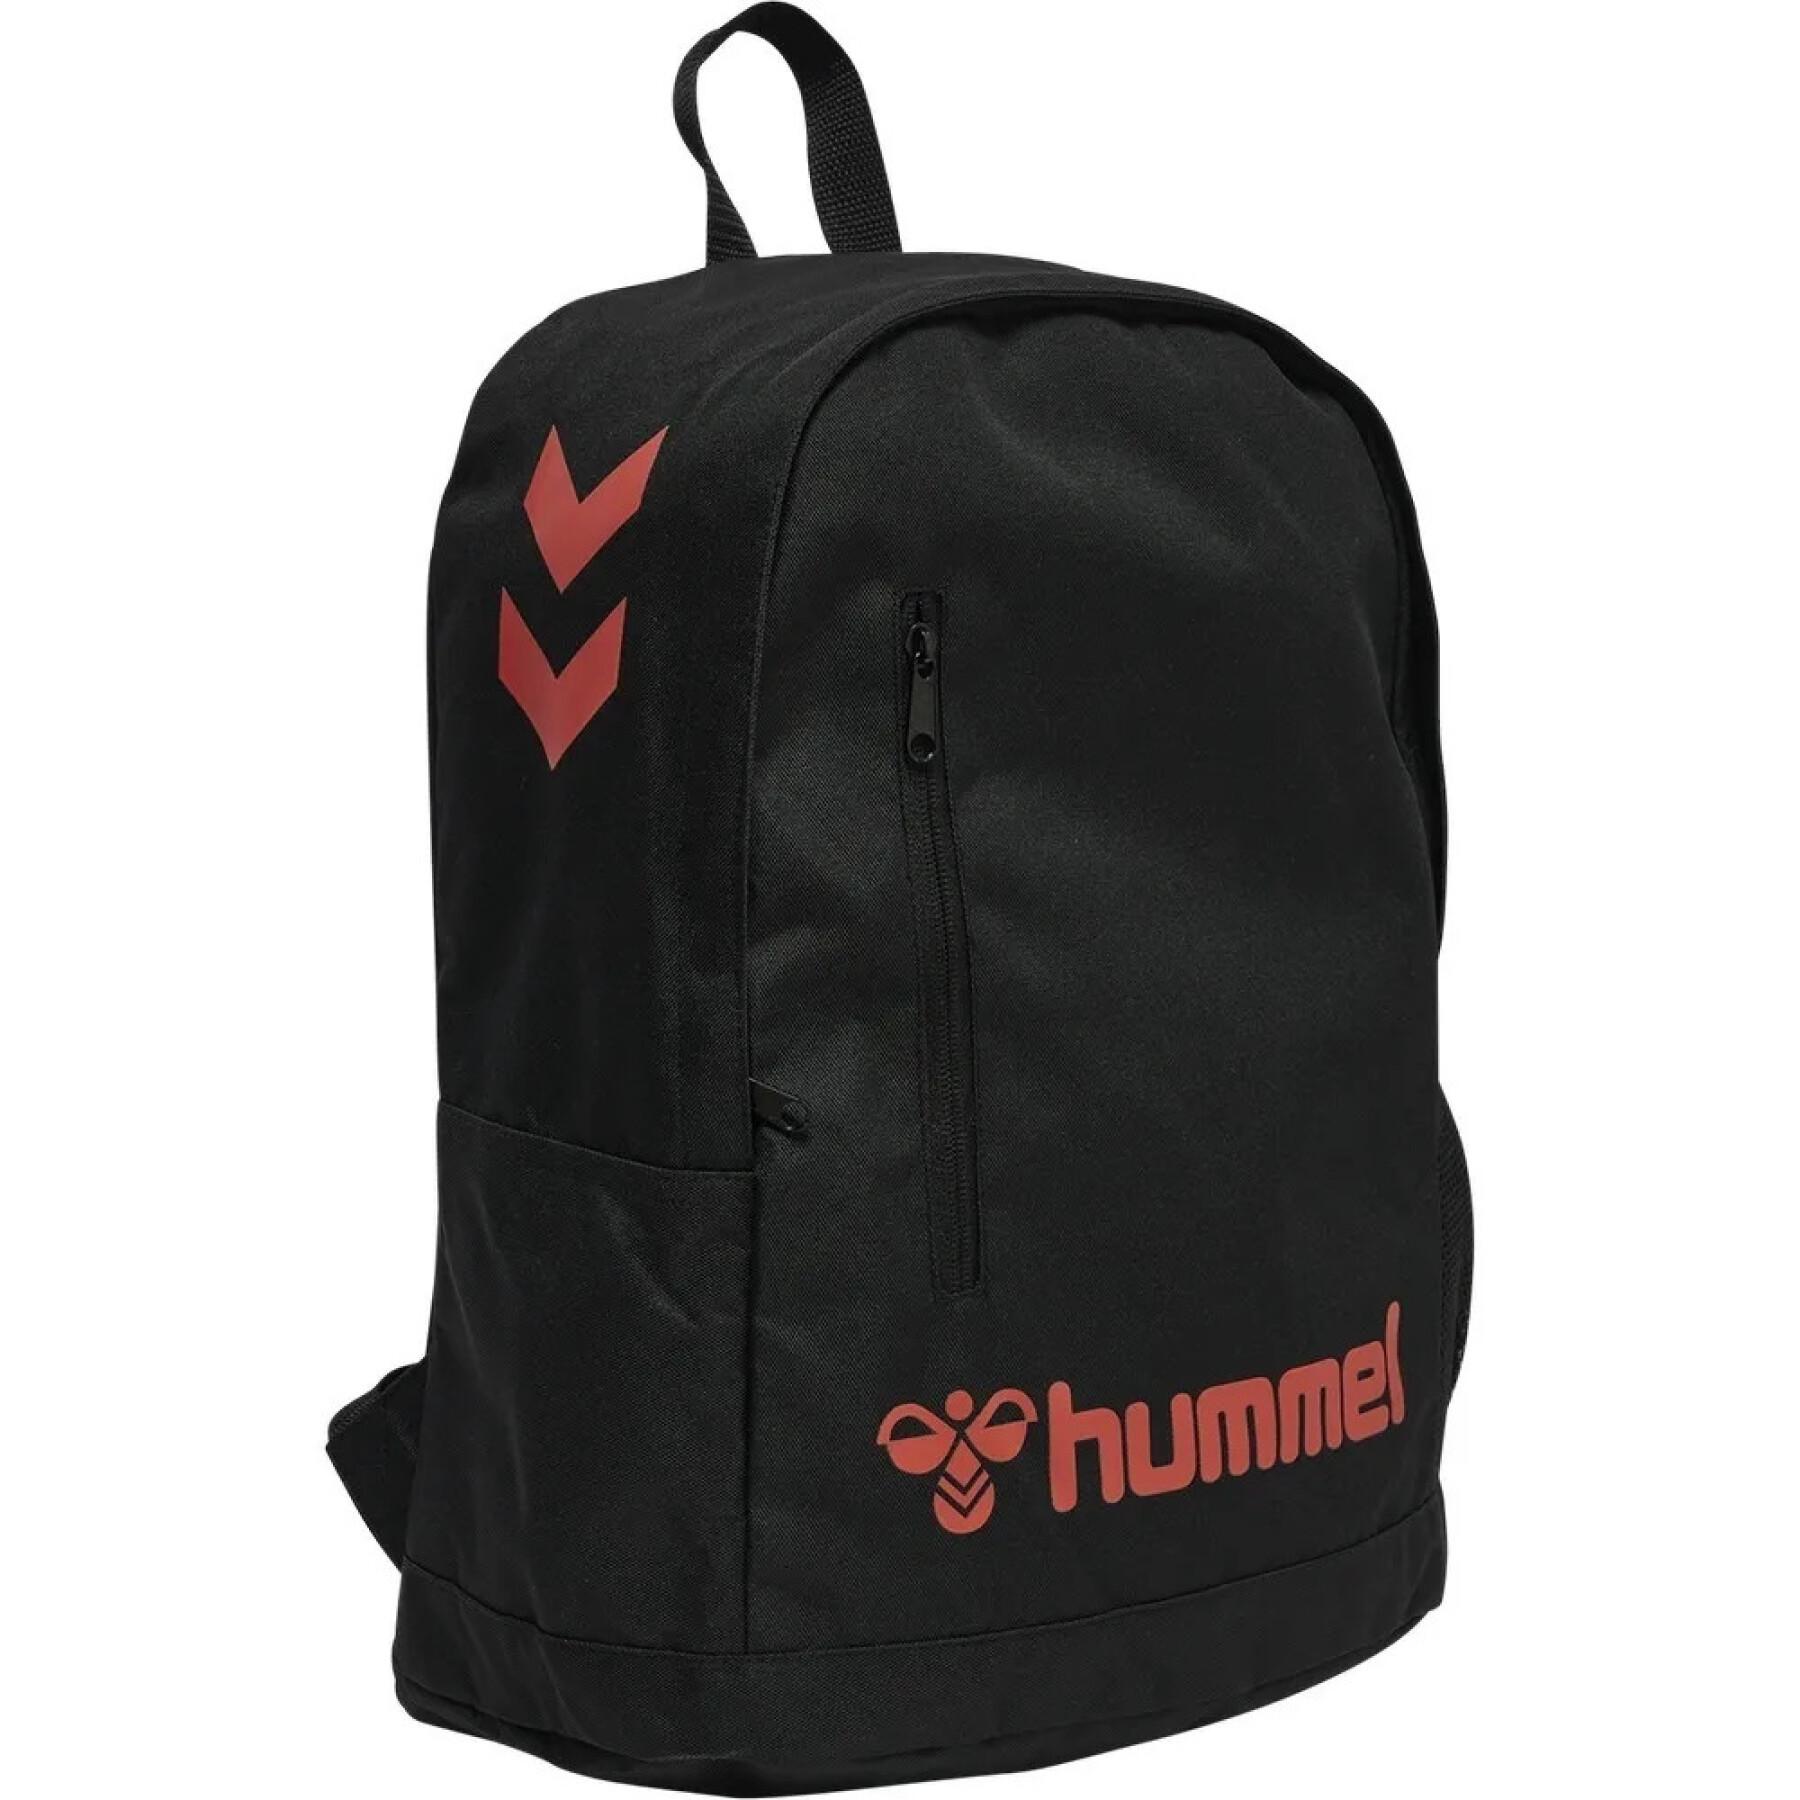 inspanning smokkel ik ben trots Backpack Hummel - Backpacks - Bags - Equipment